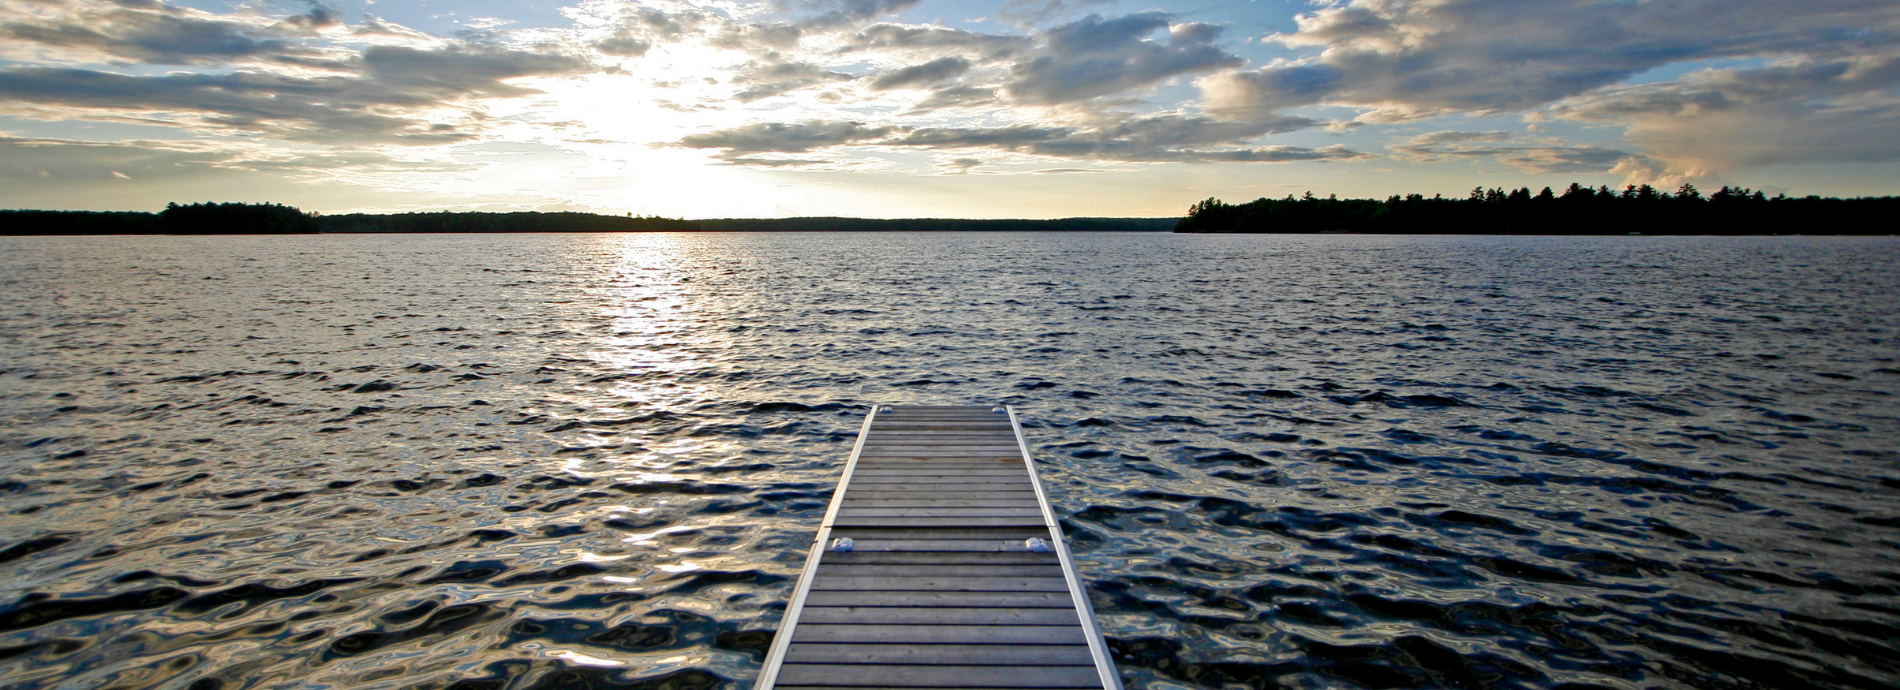 dock extending into a lake